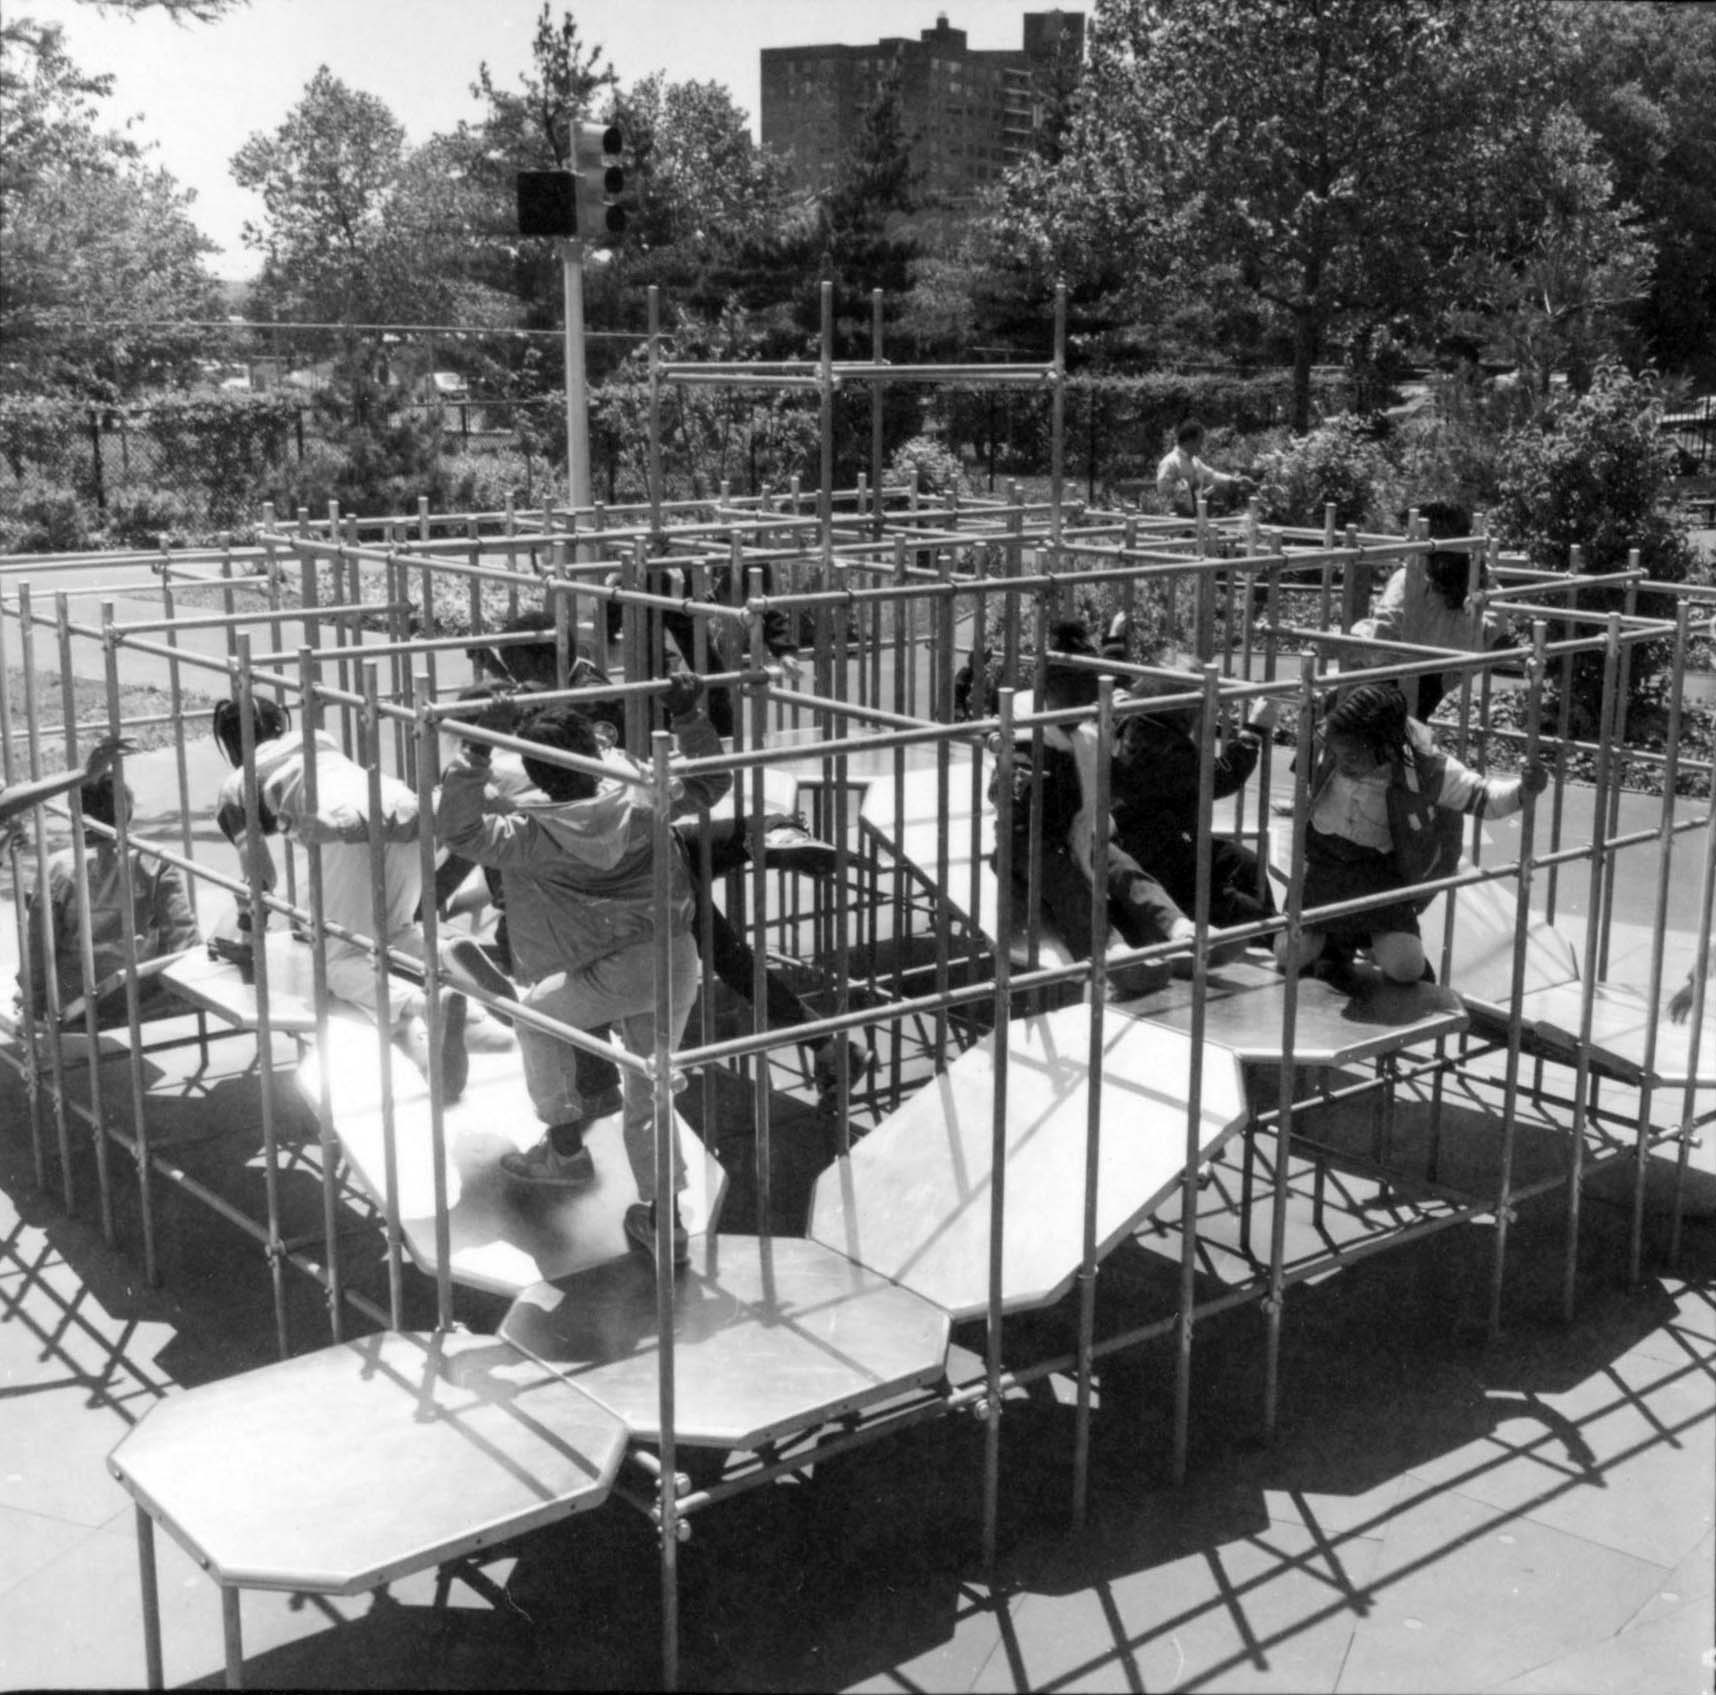 42255.17_6-1984_Opening of Playground for All Children.jpg